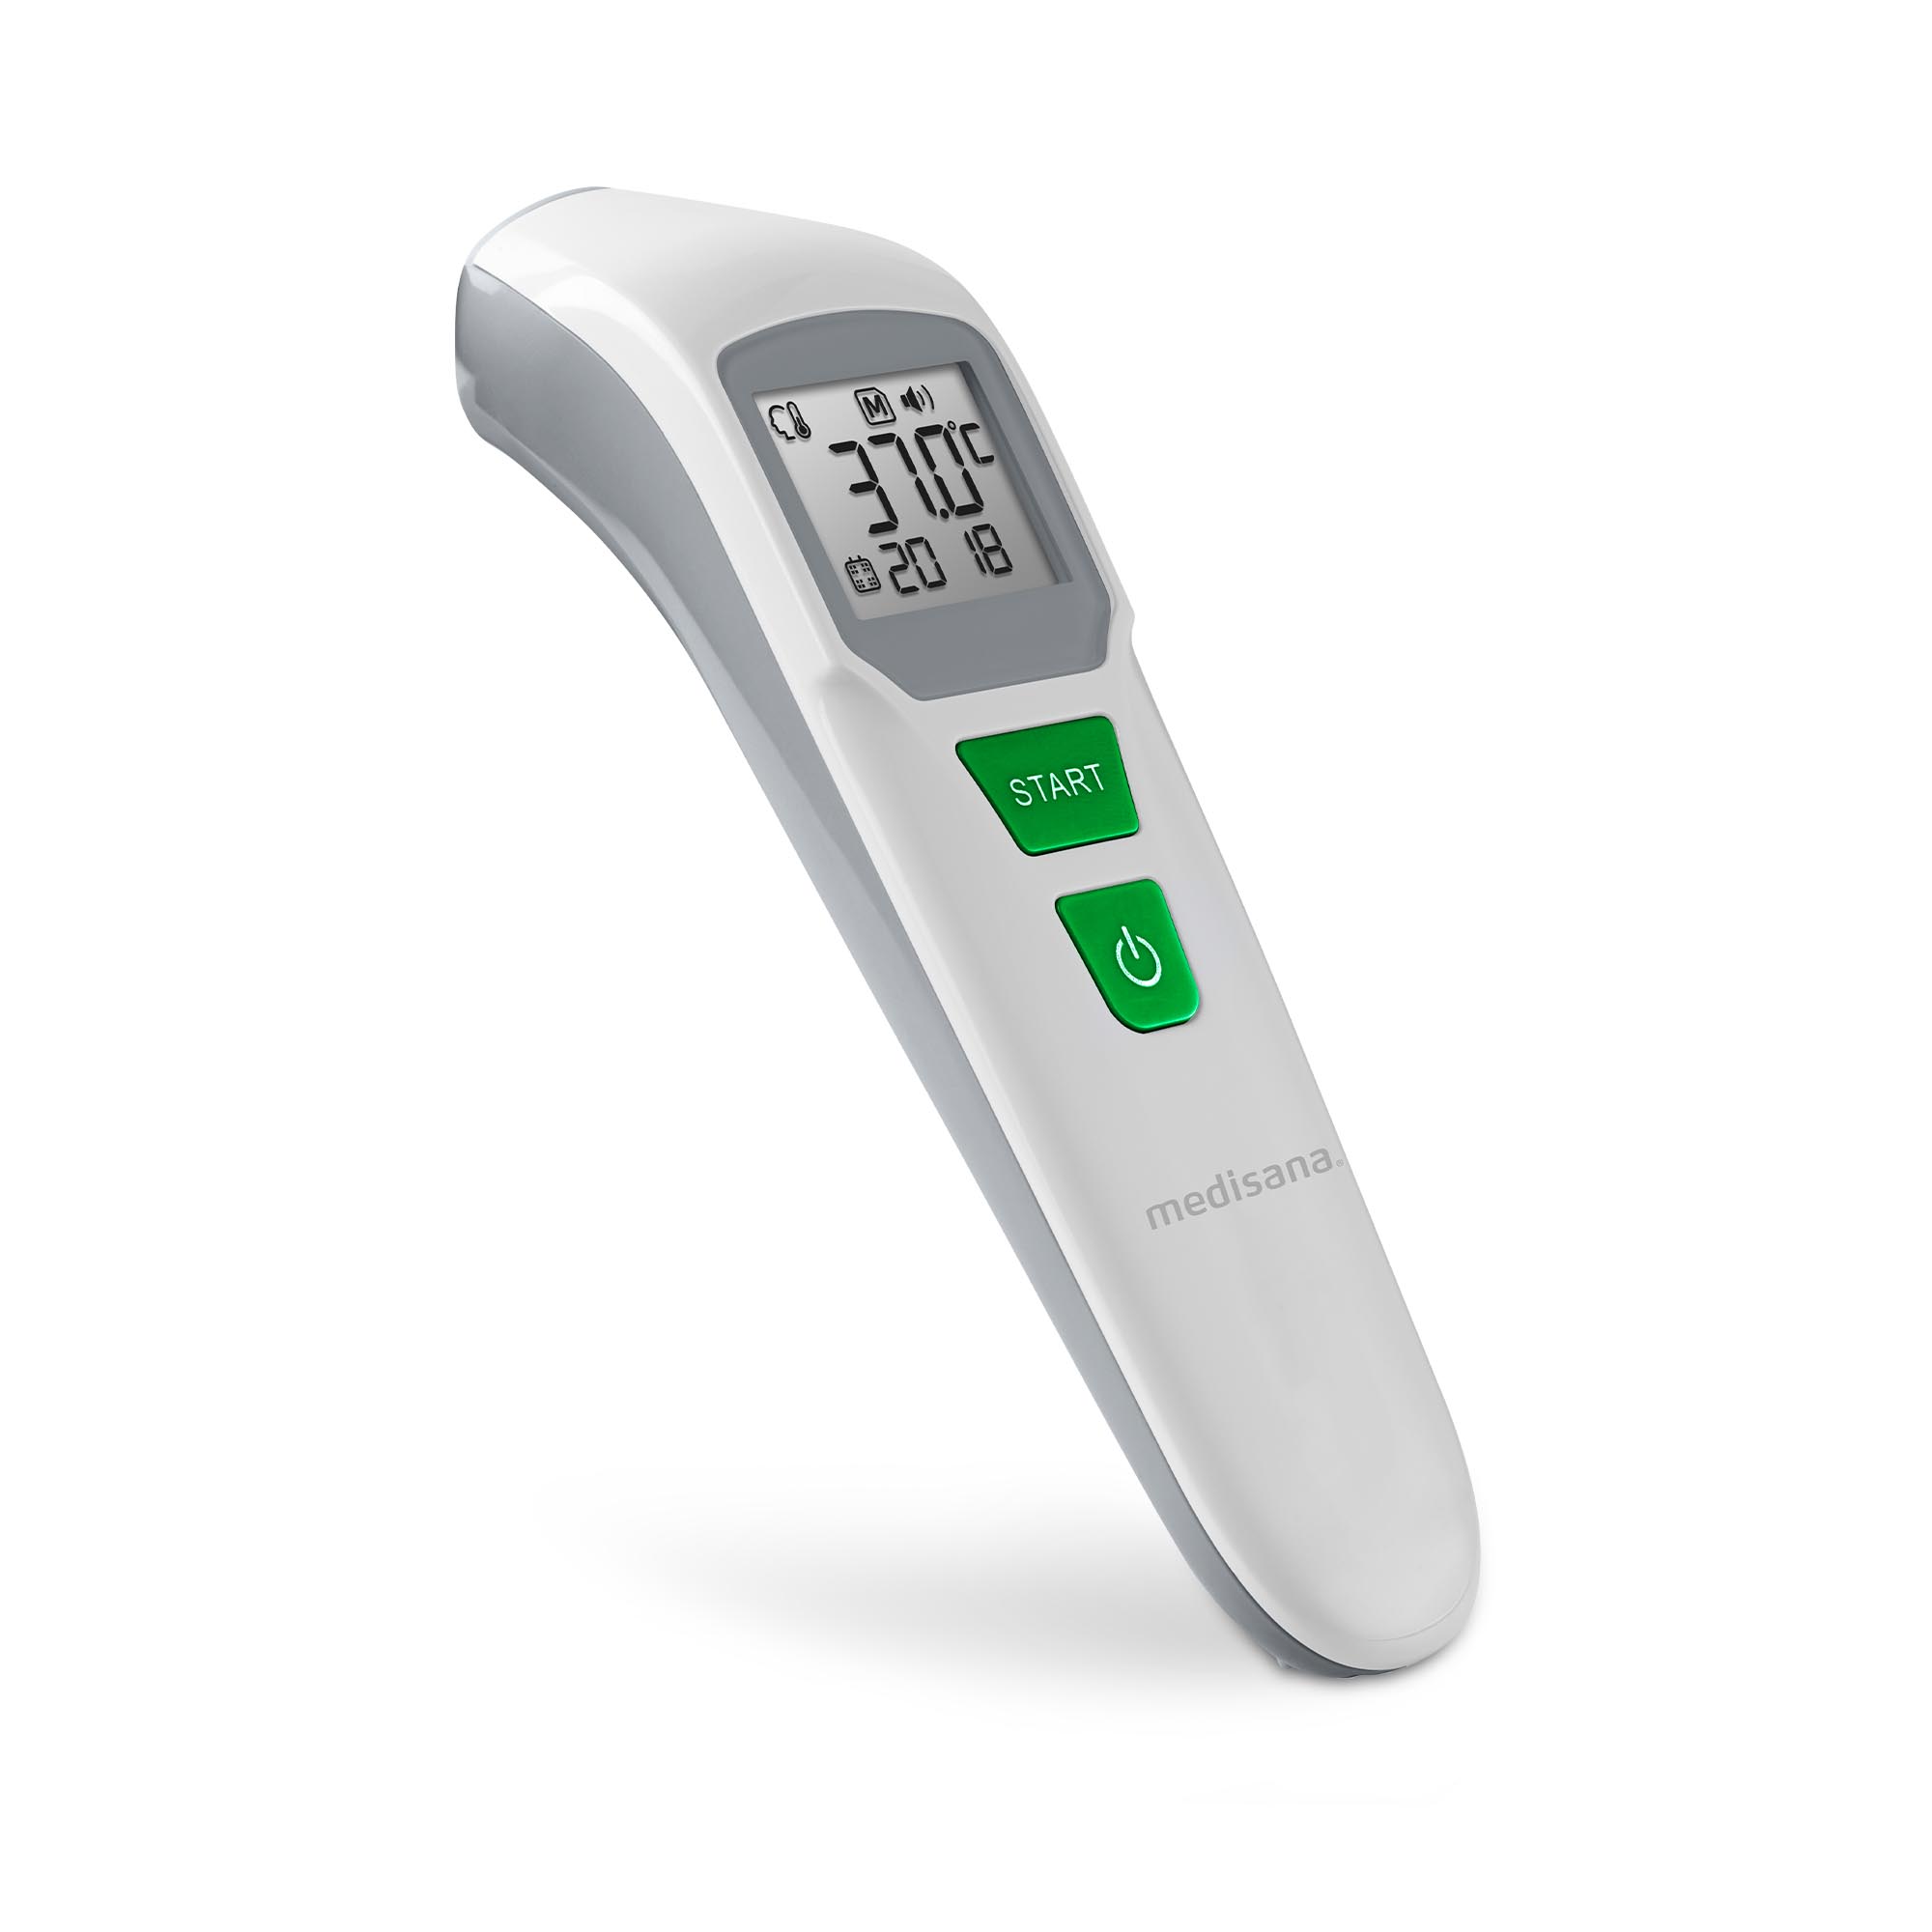 TM 762 Infrared medisana® Multi Thermometer Functional